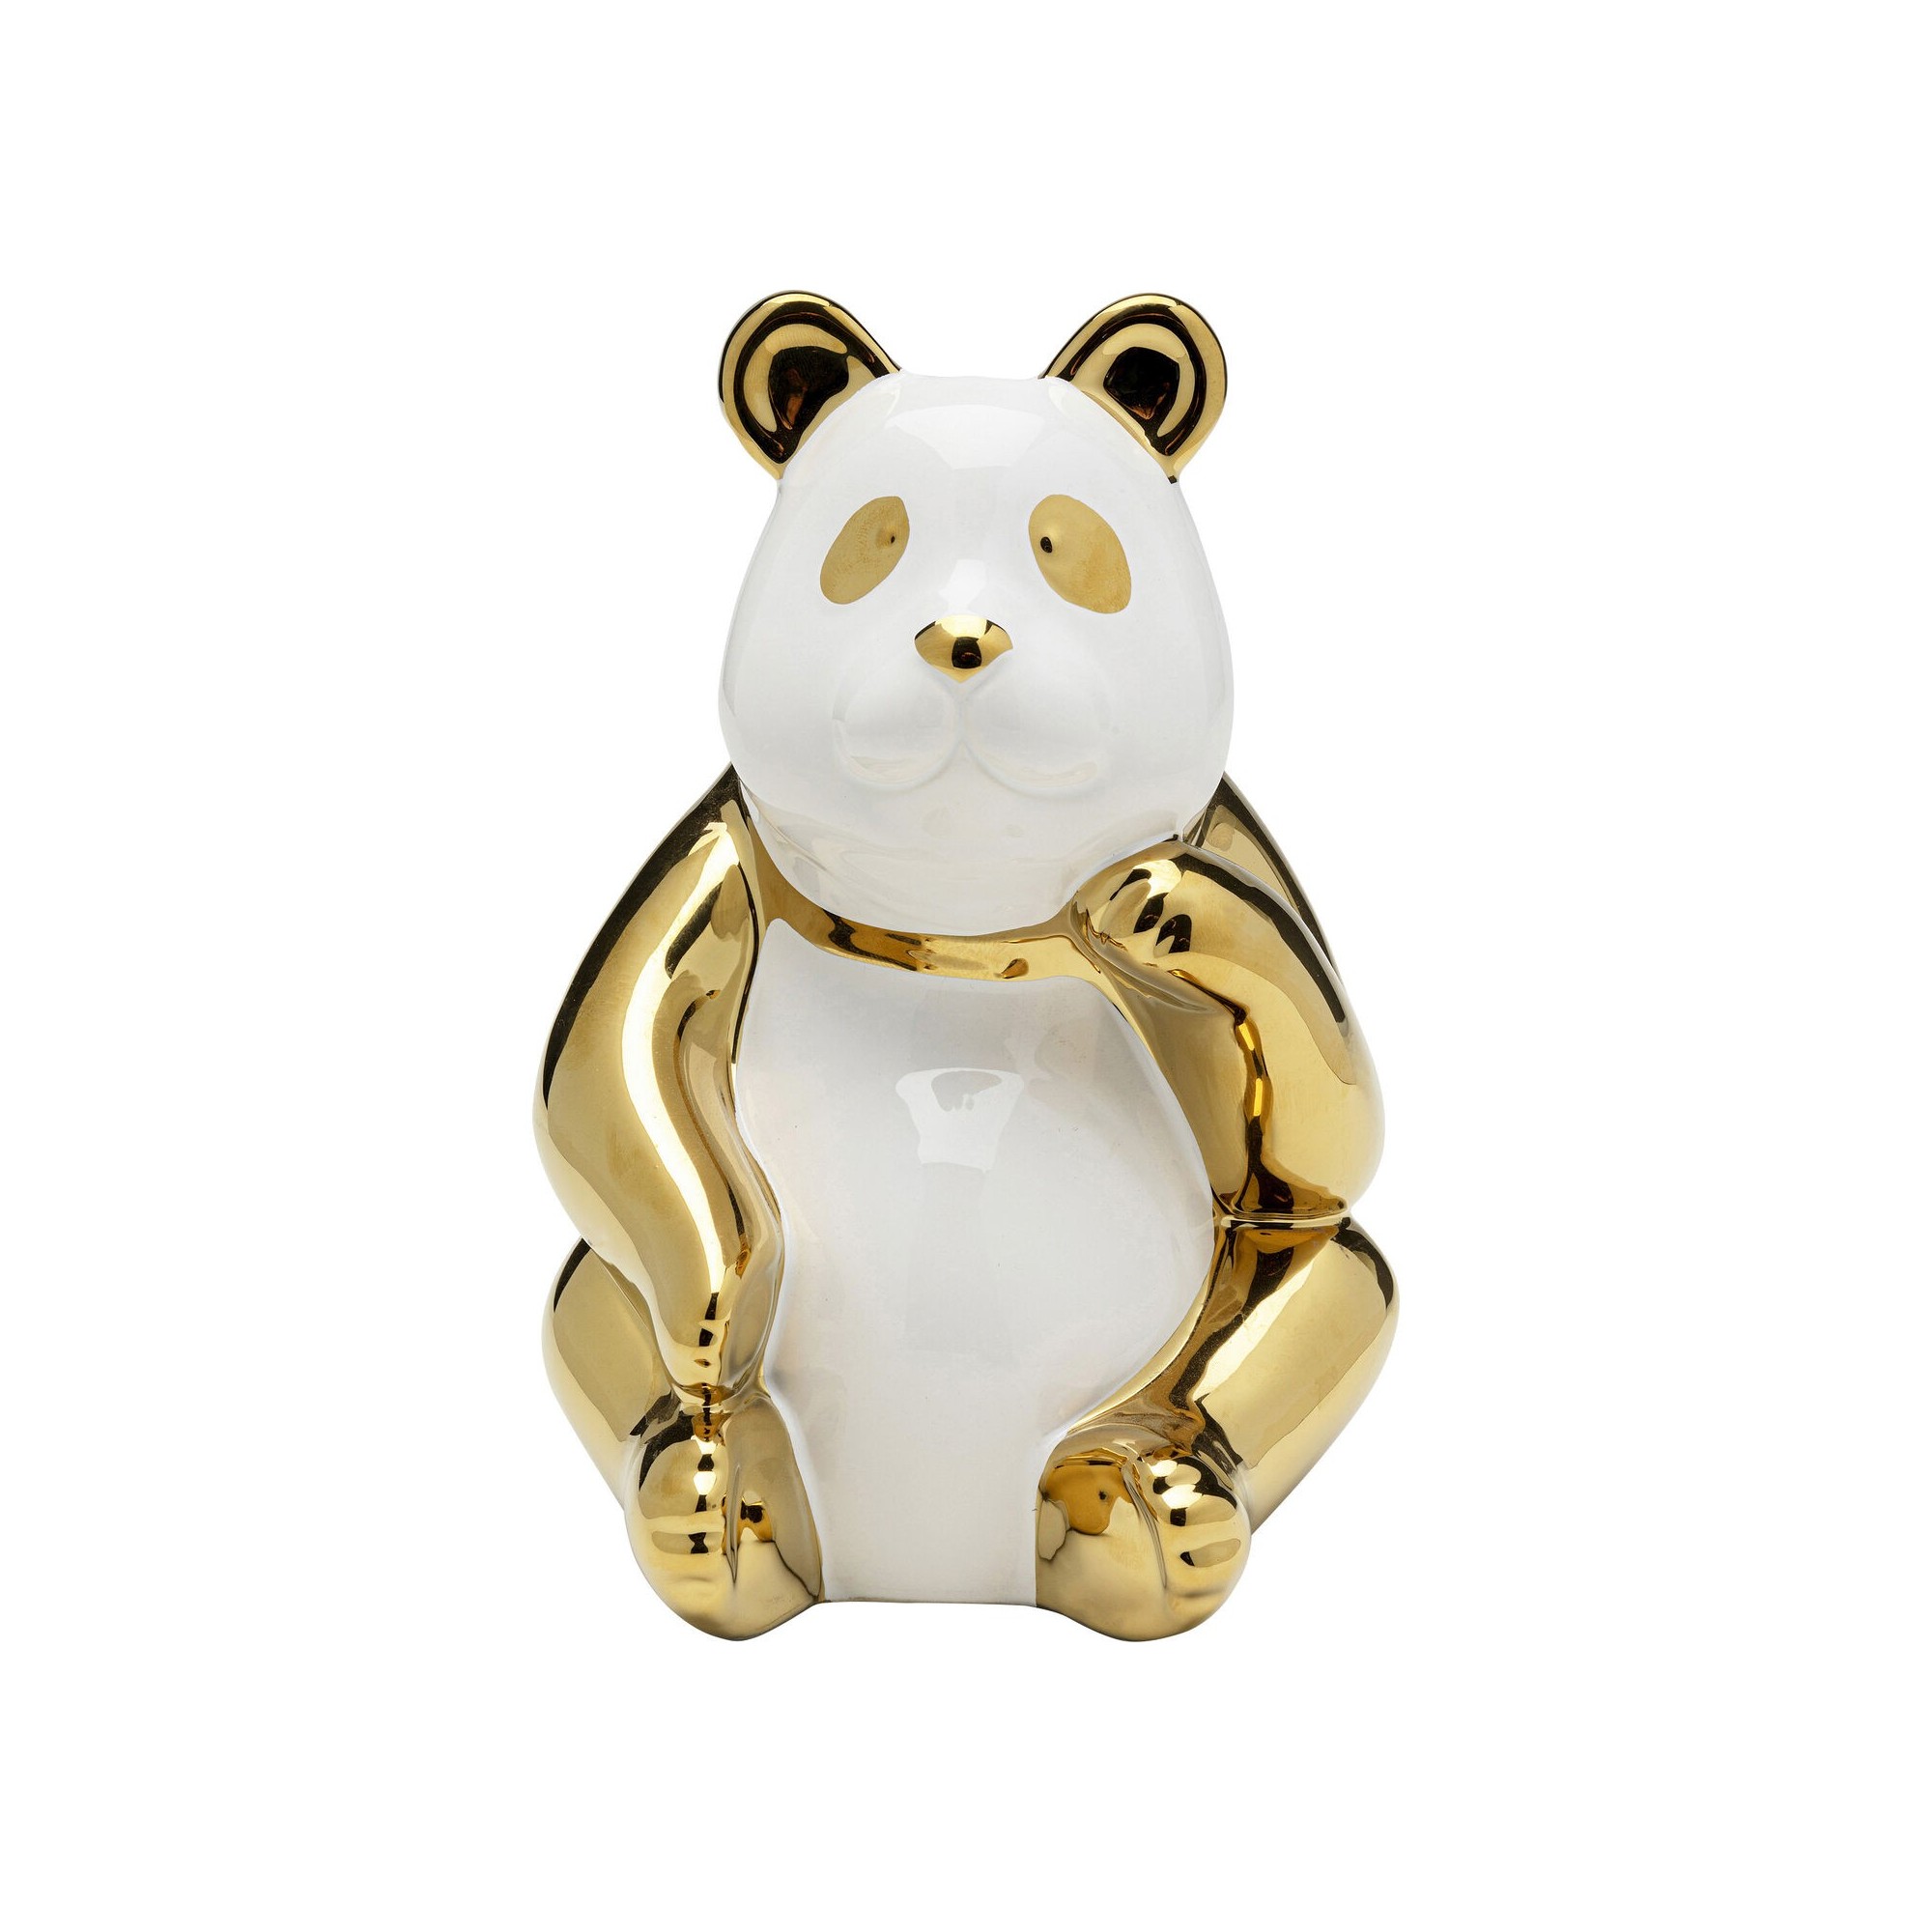 Figurine décorative Panda doré 19cm